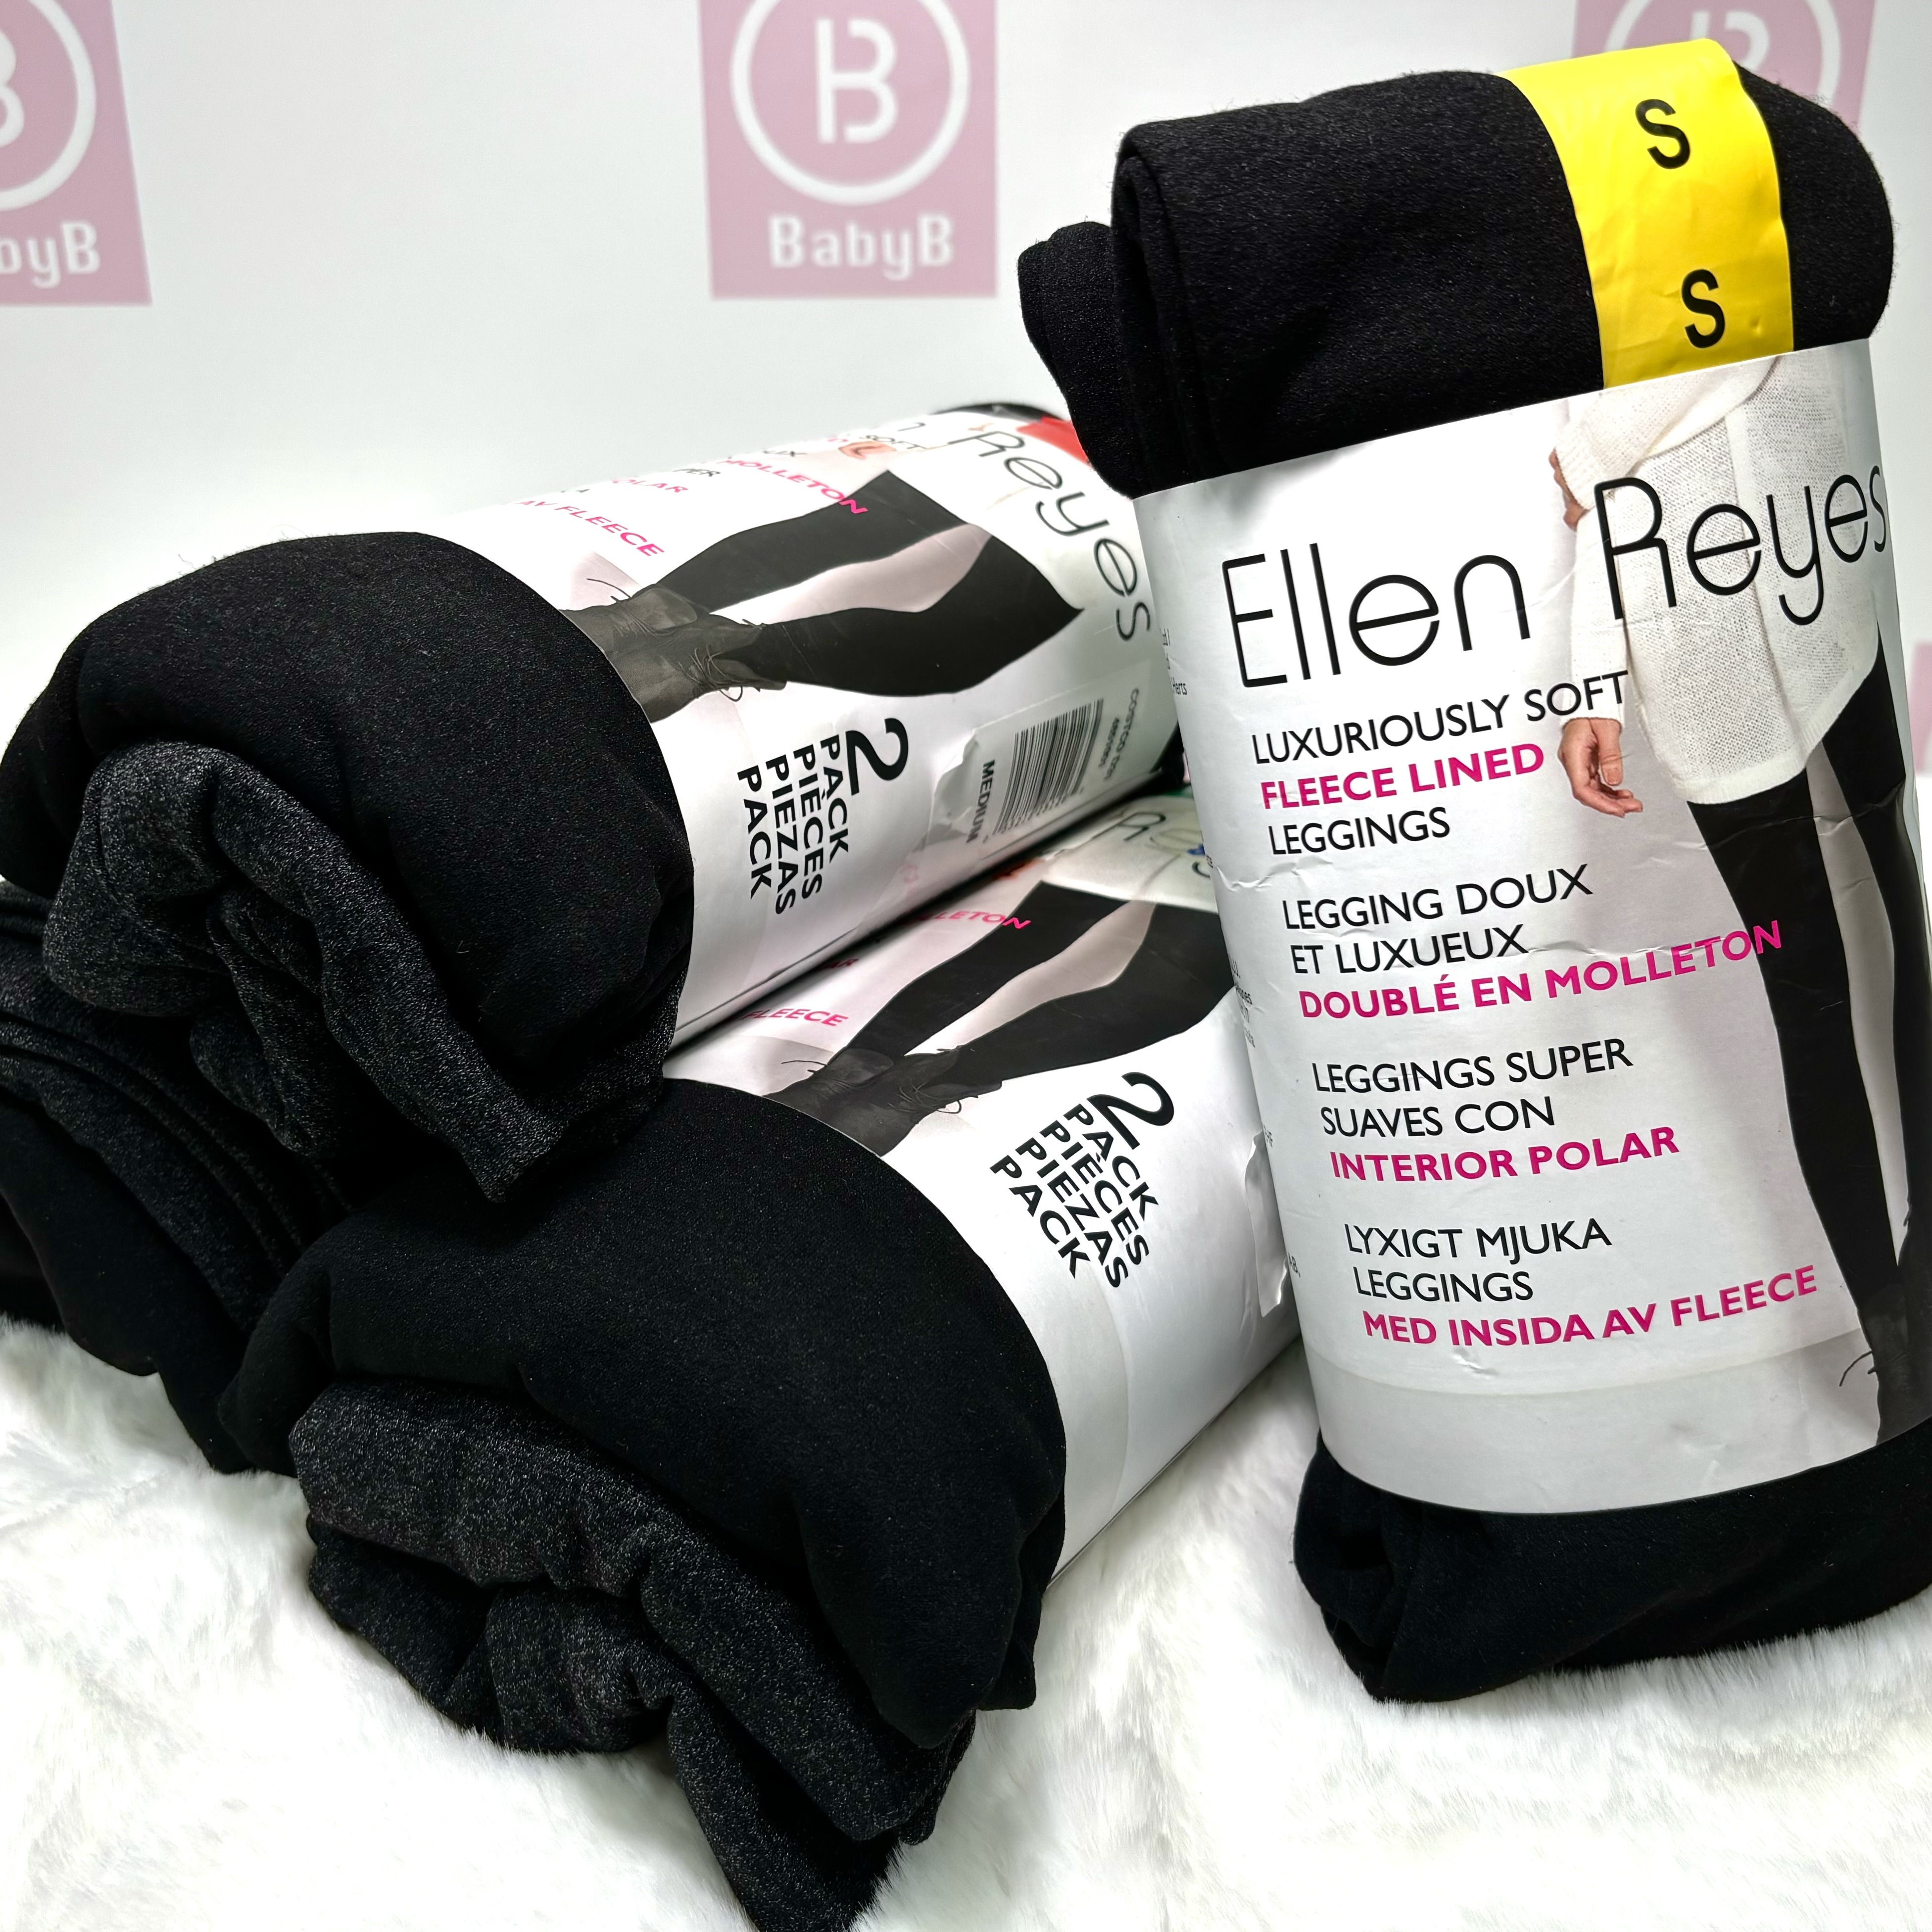 Ellen Reyes Luxuriously Soft Fleece Lined Leggings 2 Pack black